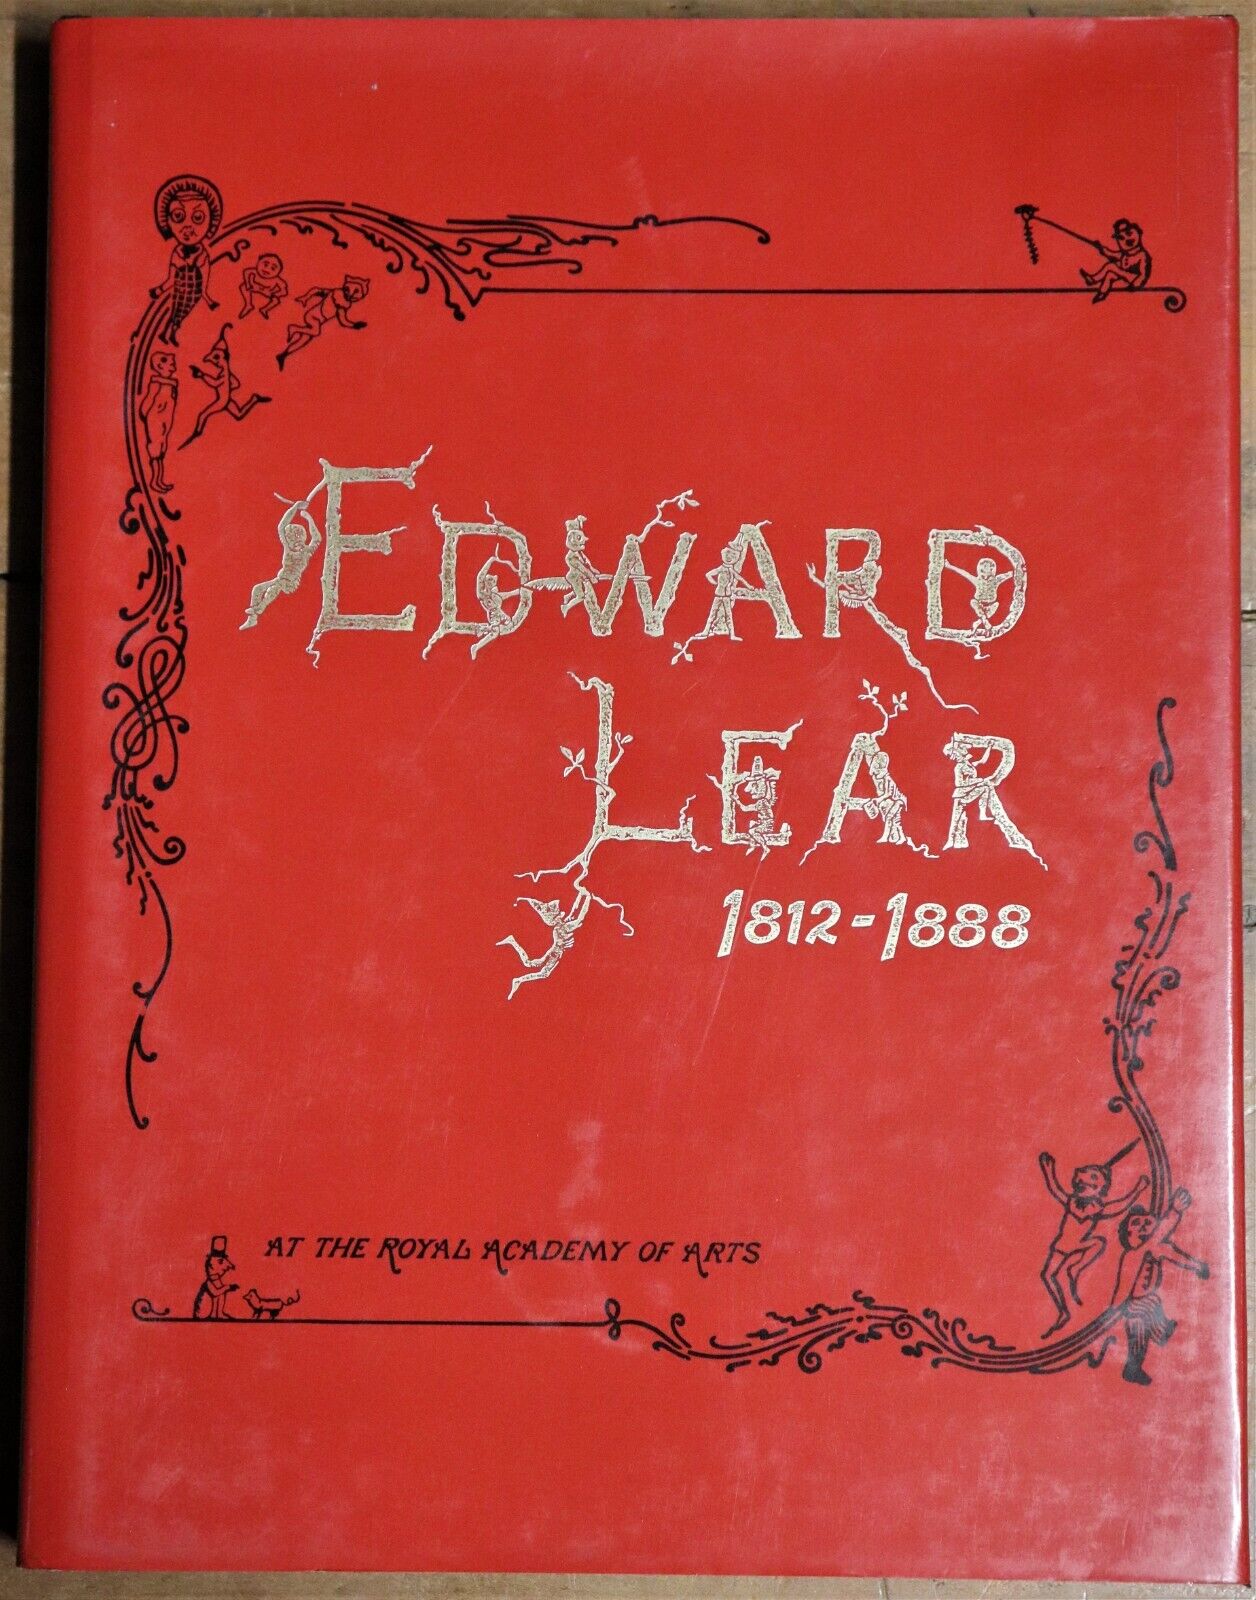 Edward Lear: 1812 - 1888 by Vivien Noakes - 1985 - 1st Edition - Art Book